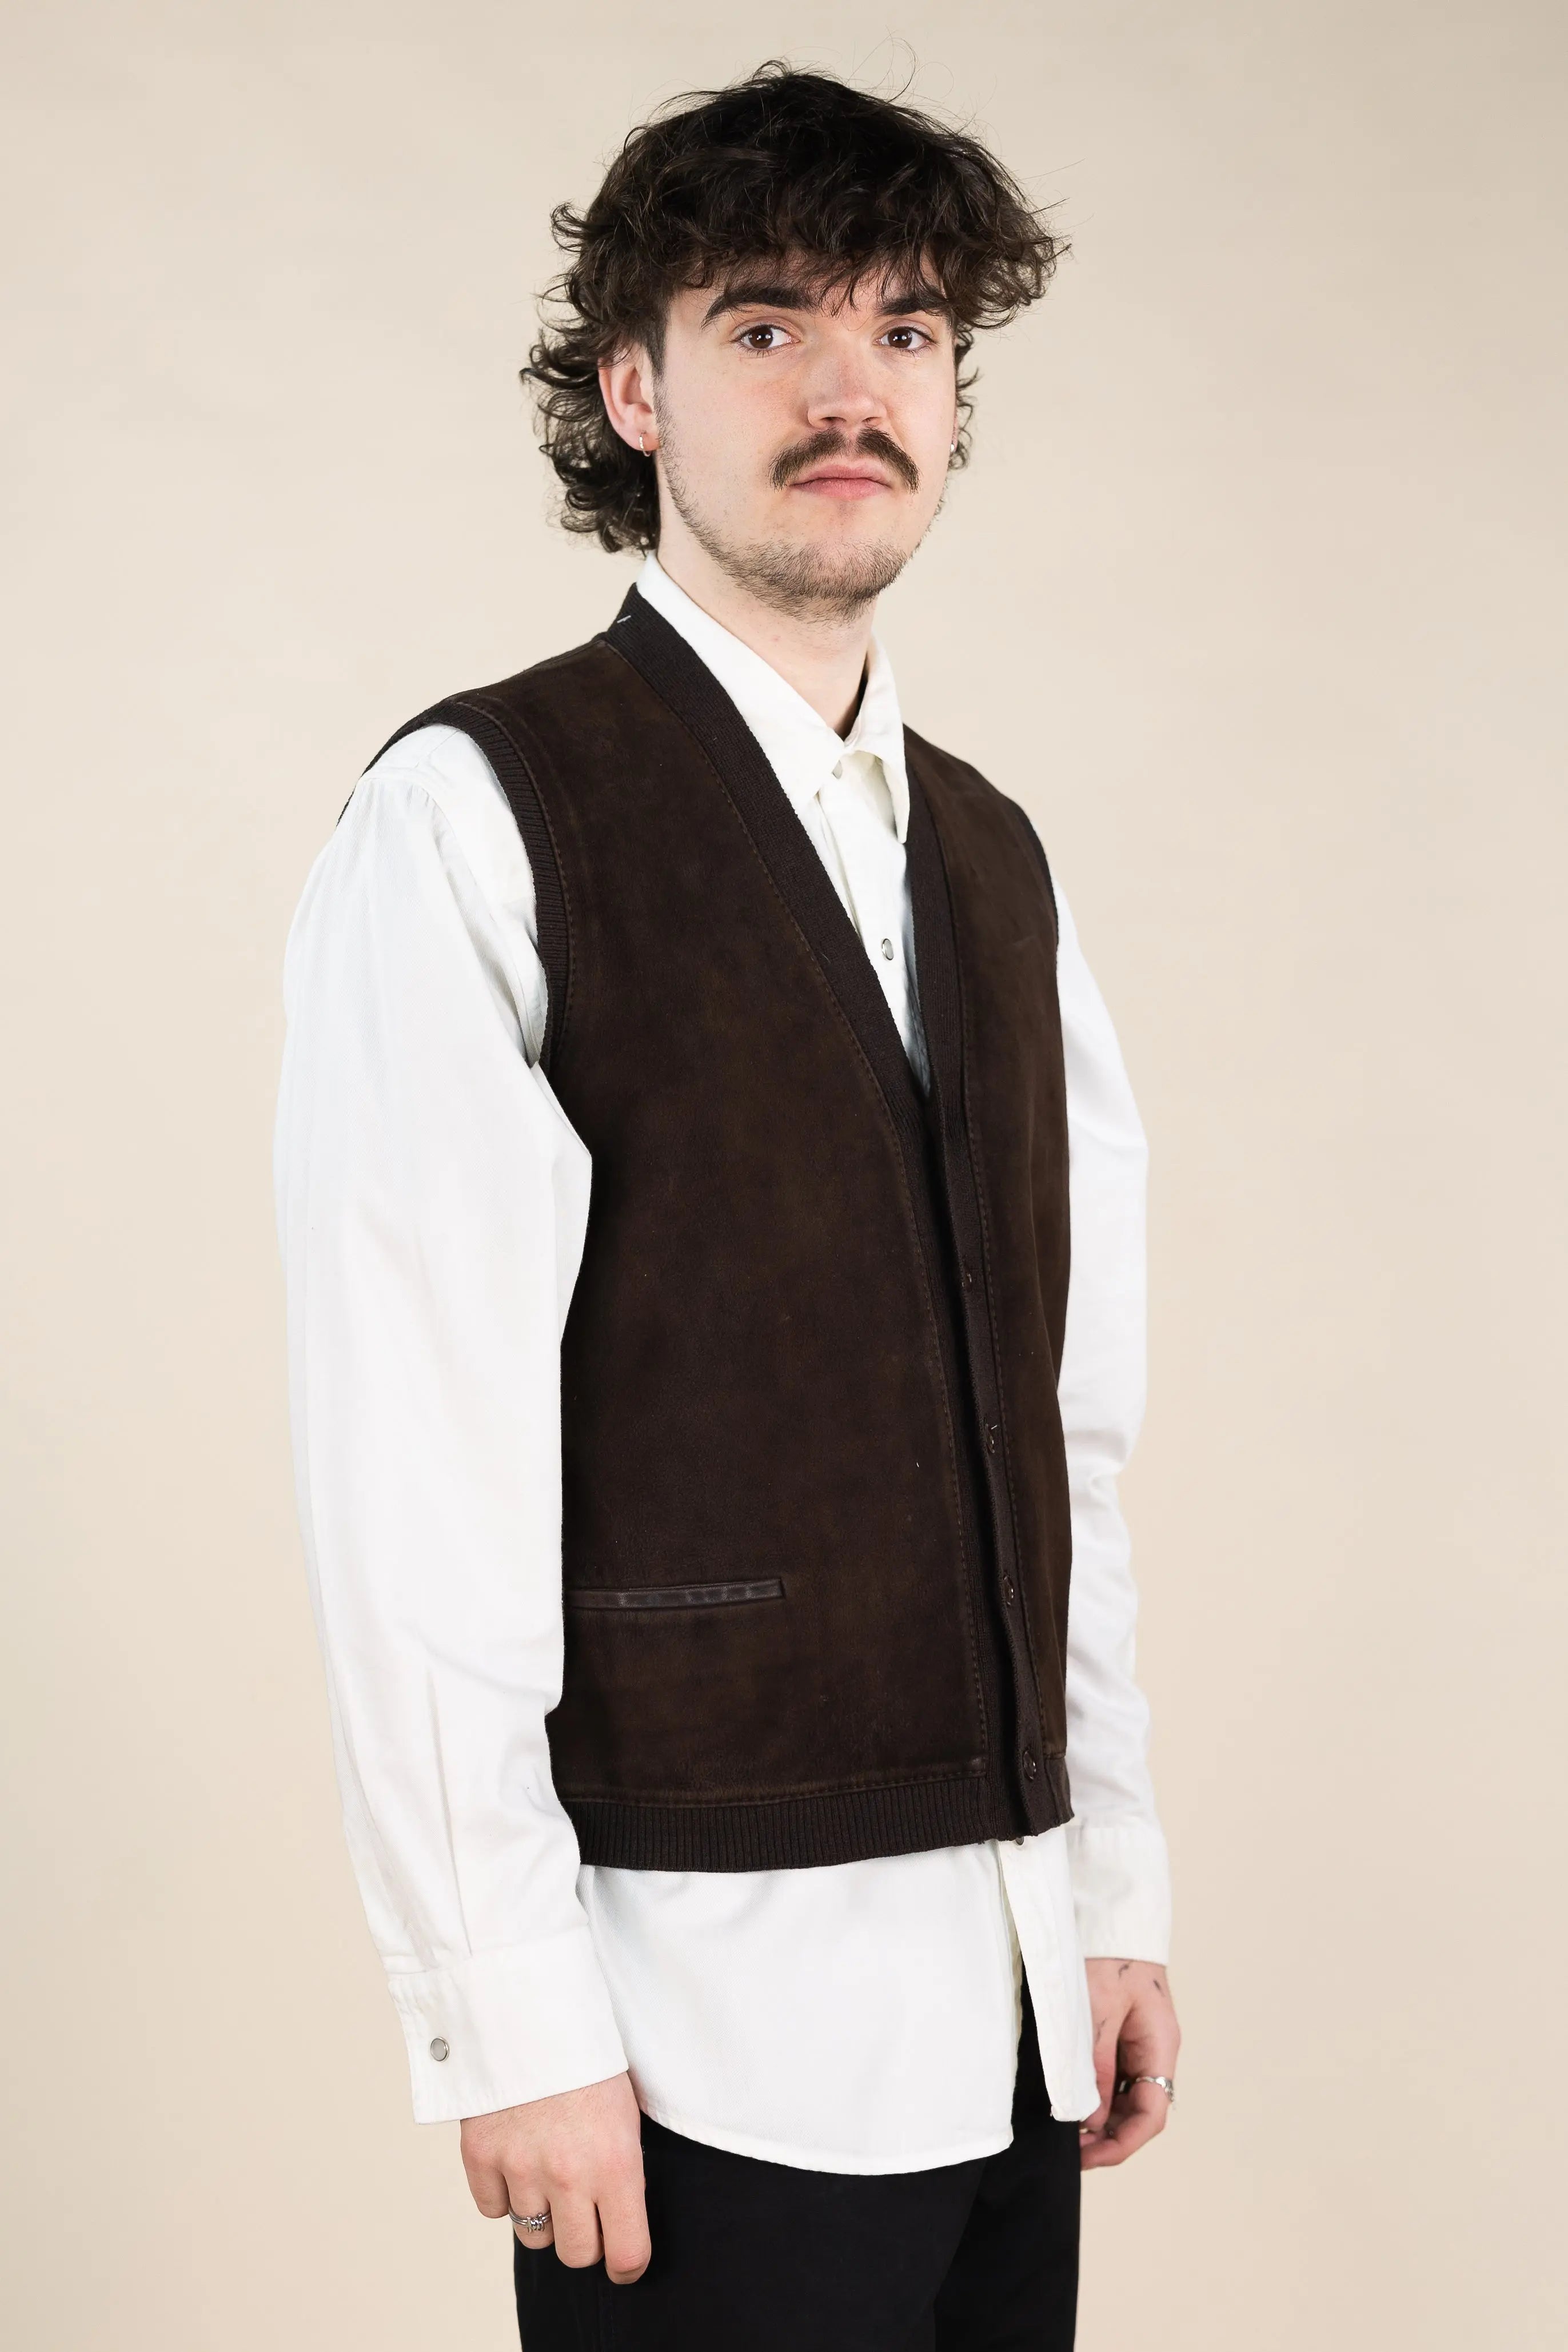 Villydaim - Leather Vest- ThriftTale.com - Vintage and second handclothing